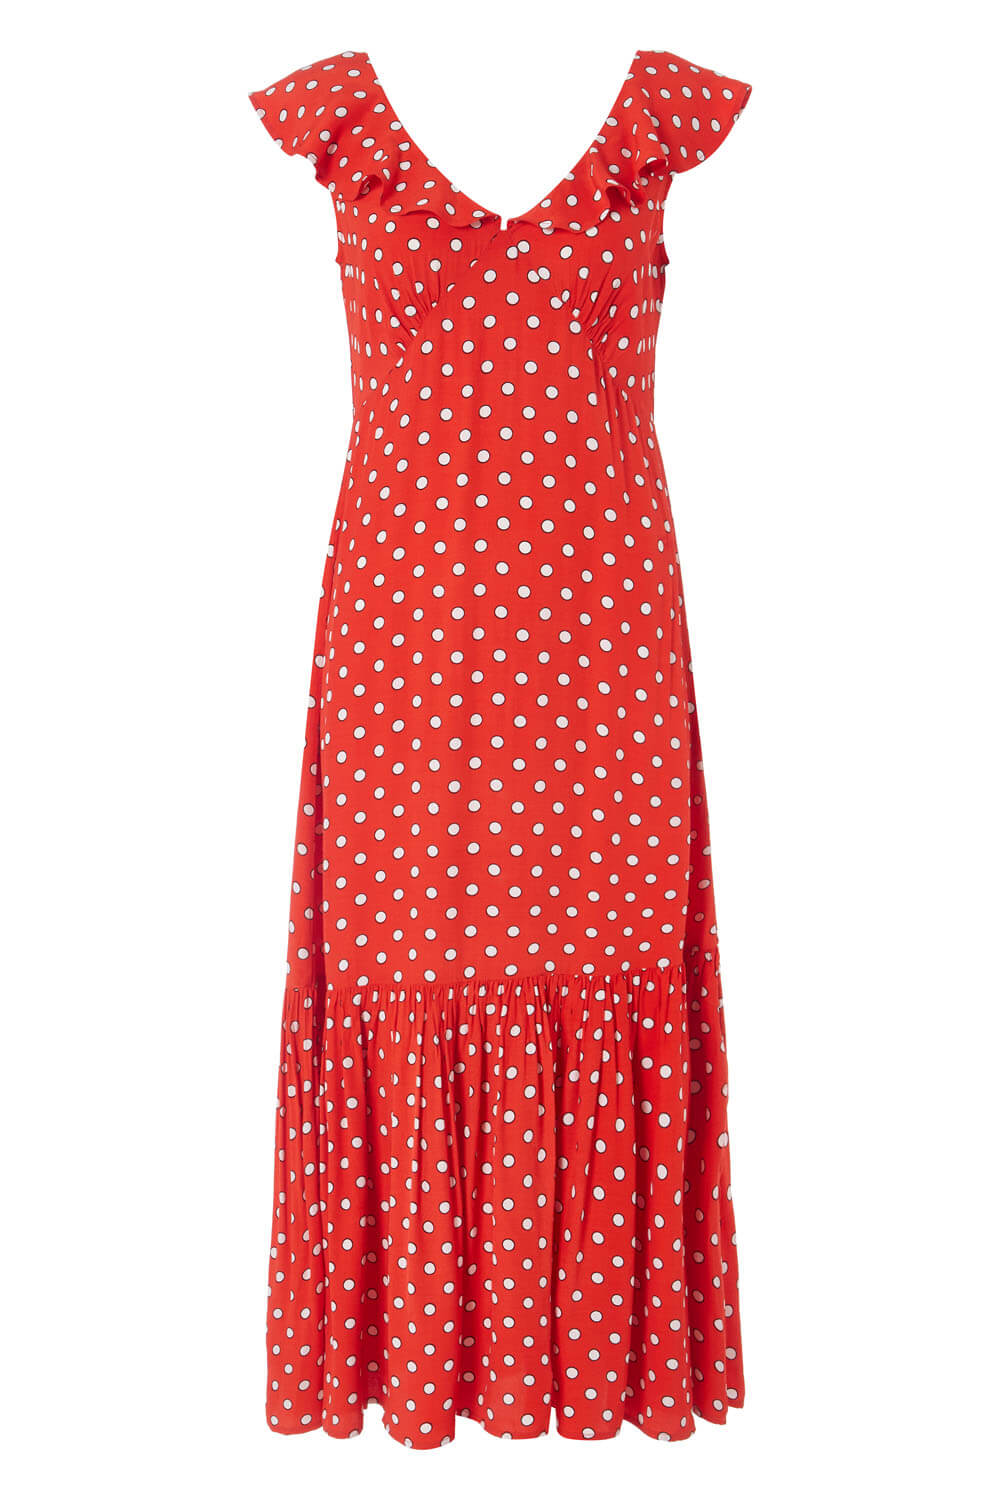 Red Polka Dot Frilly Midi Dress, Image 5 of 5